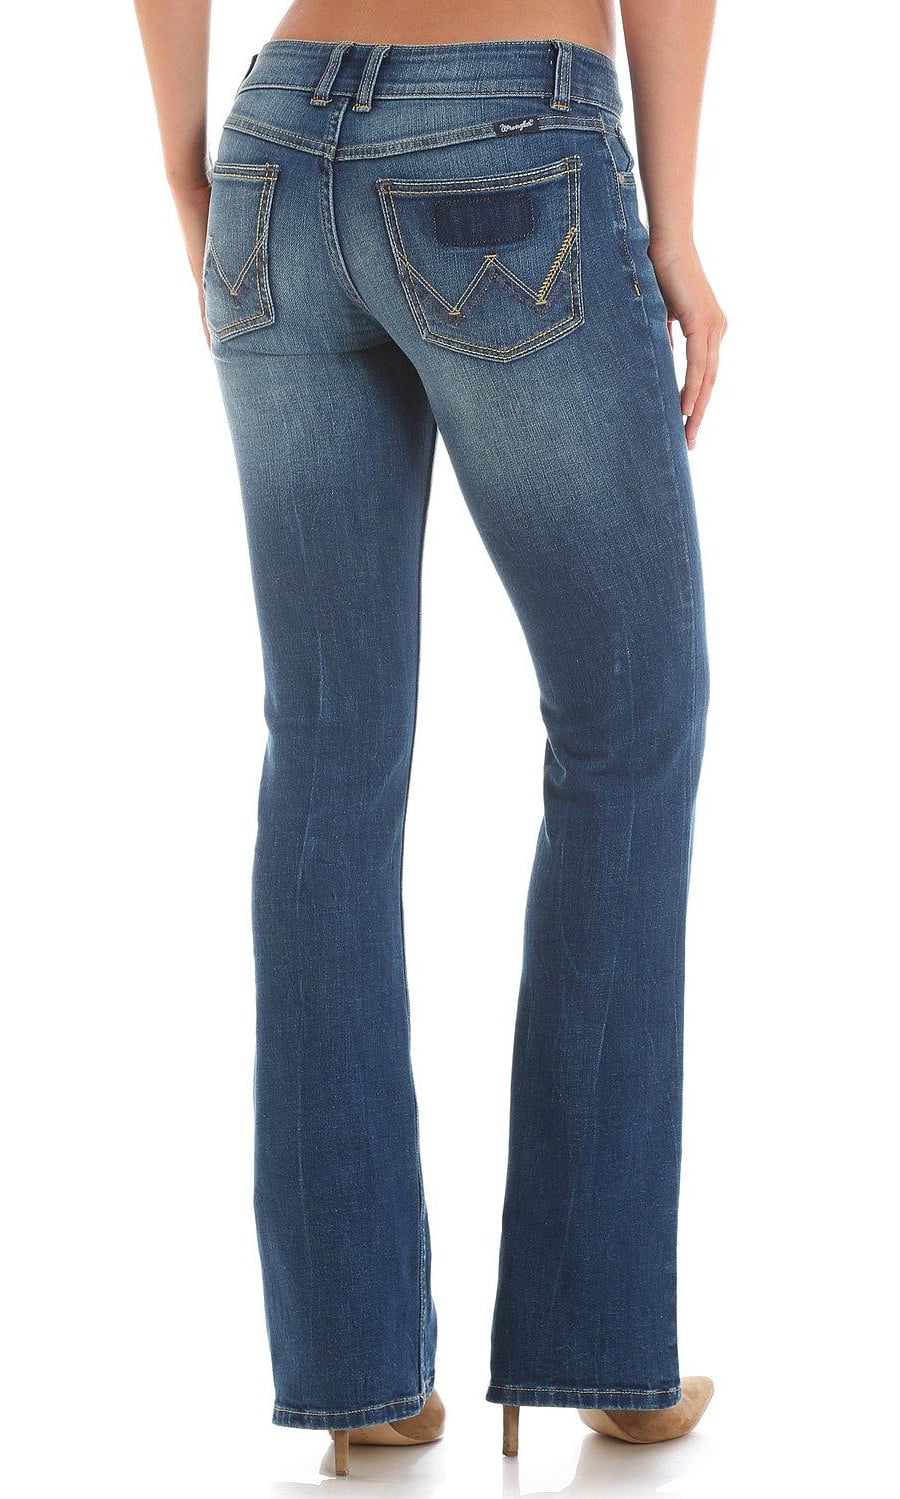 Wrangler Women's Indigo Retro Sadie Jeans Boot Cut - 07Mwzmd - Walmart.com